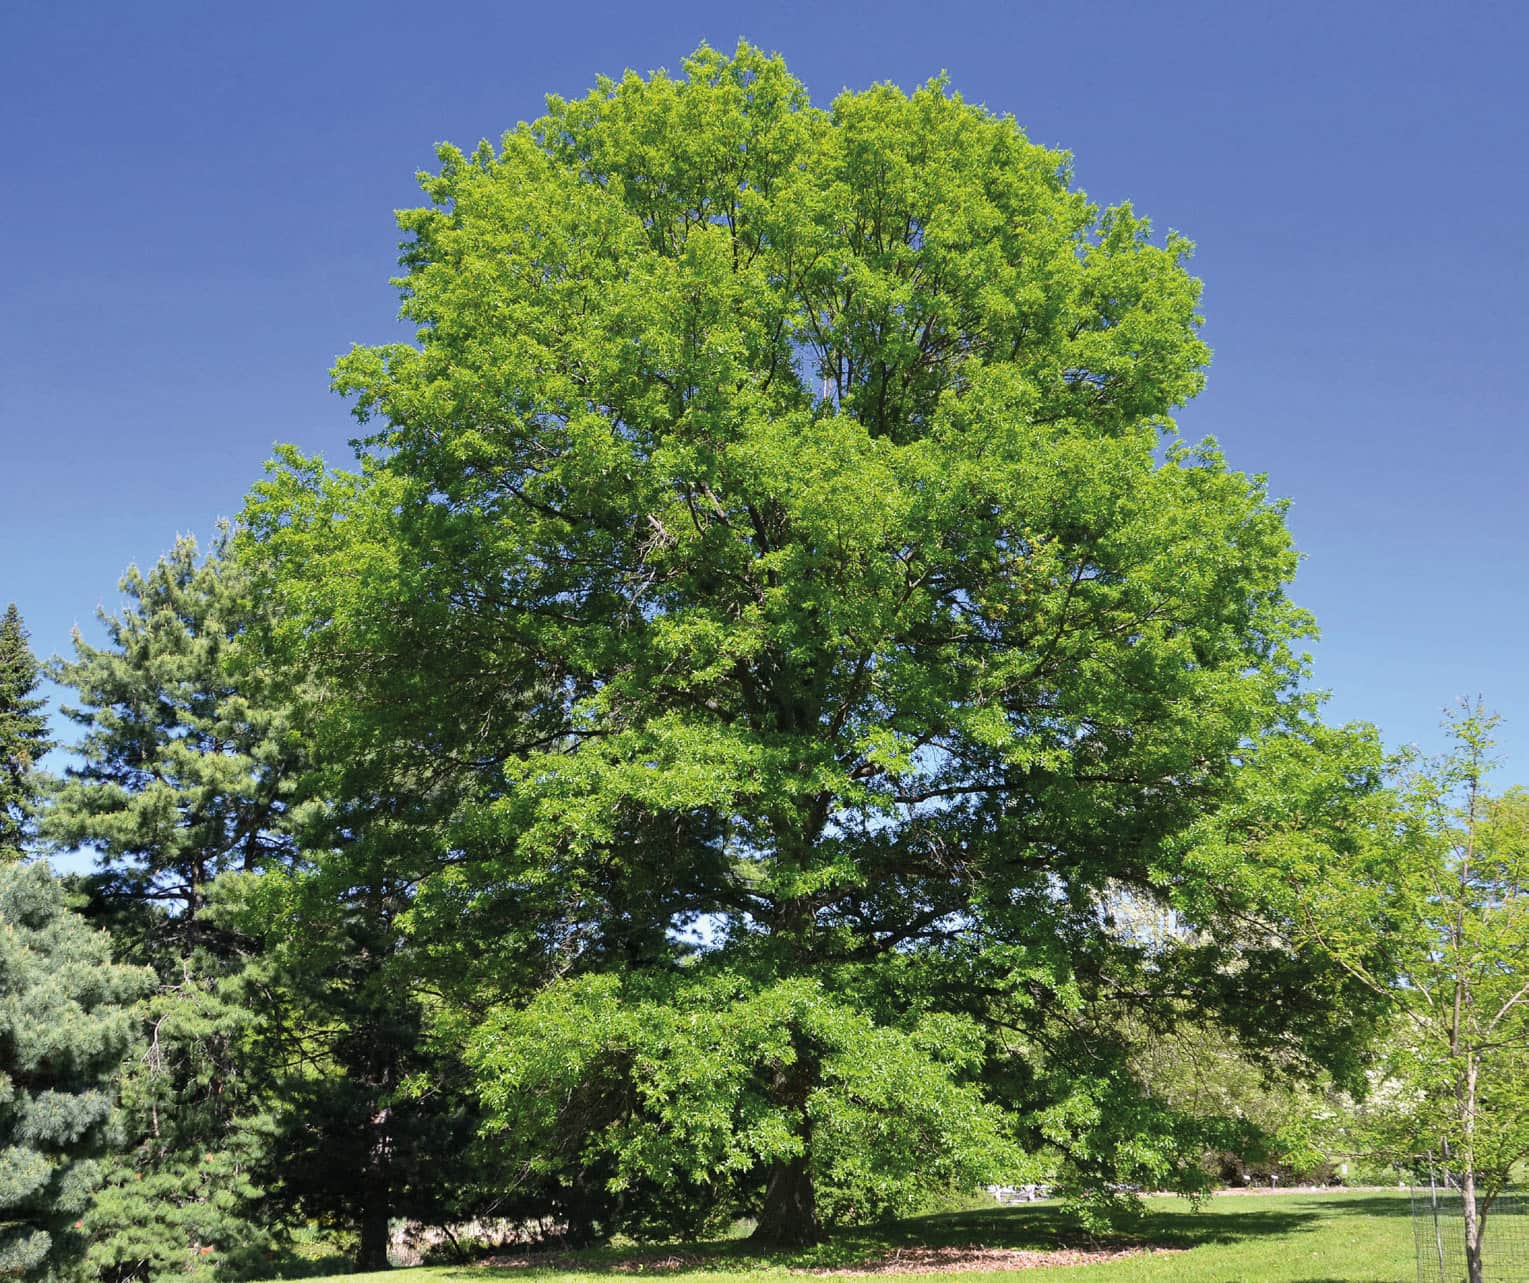 Older scarlet oak trees develop a rounded crown shape.